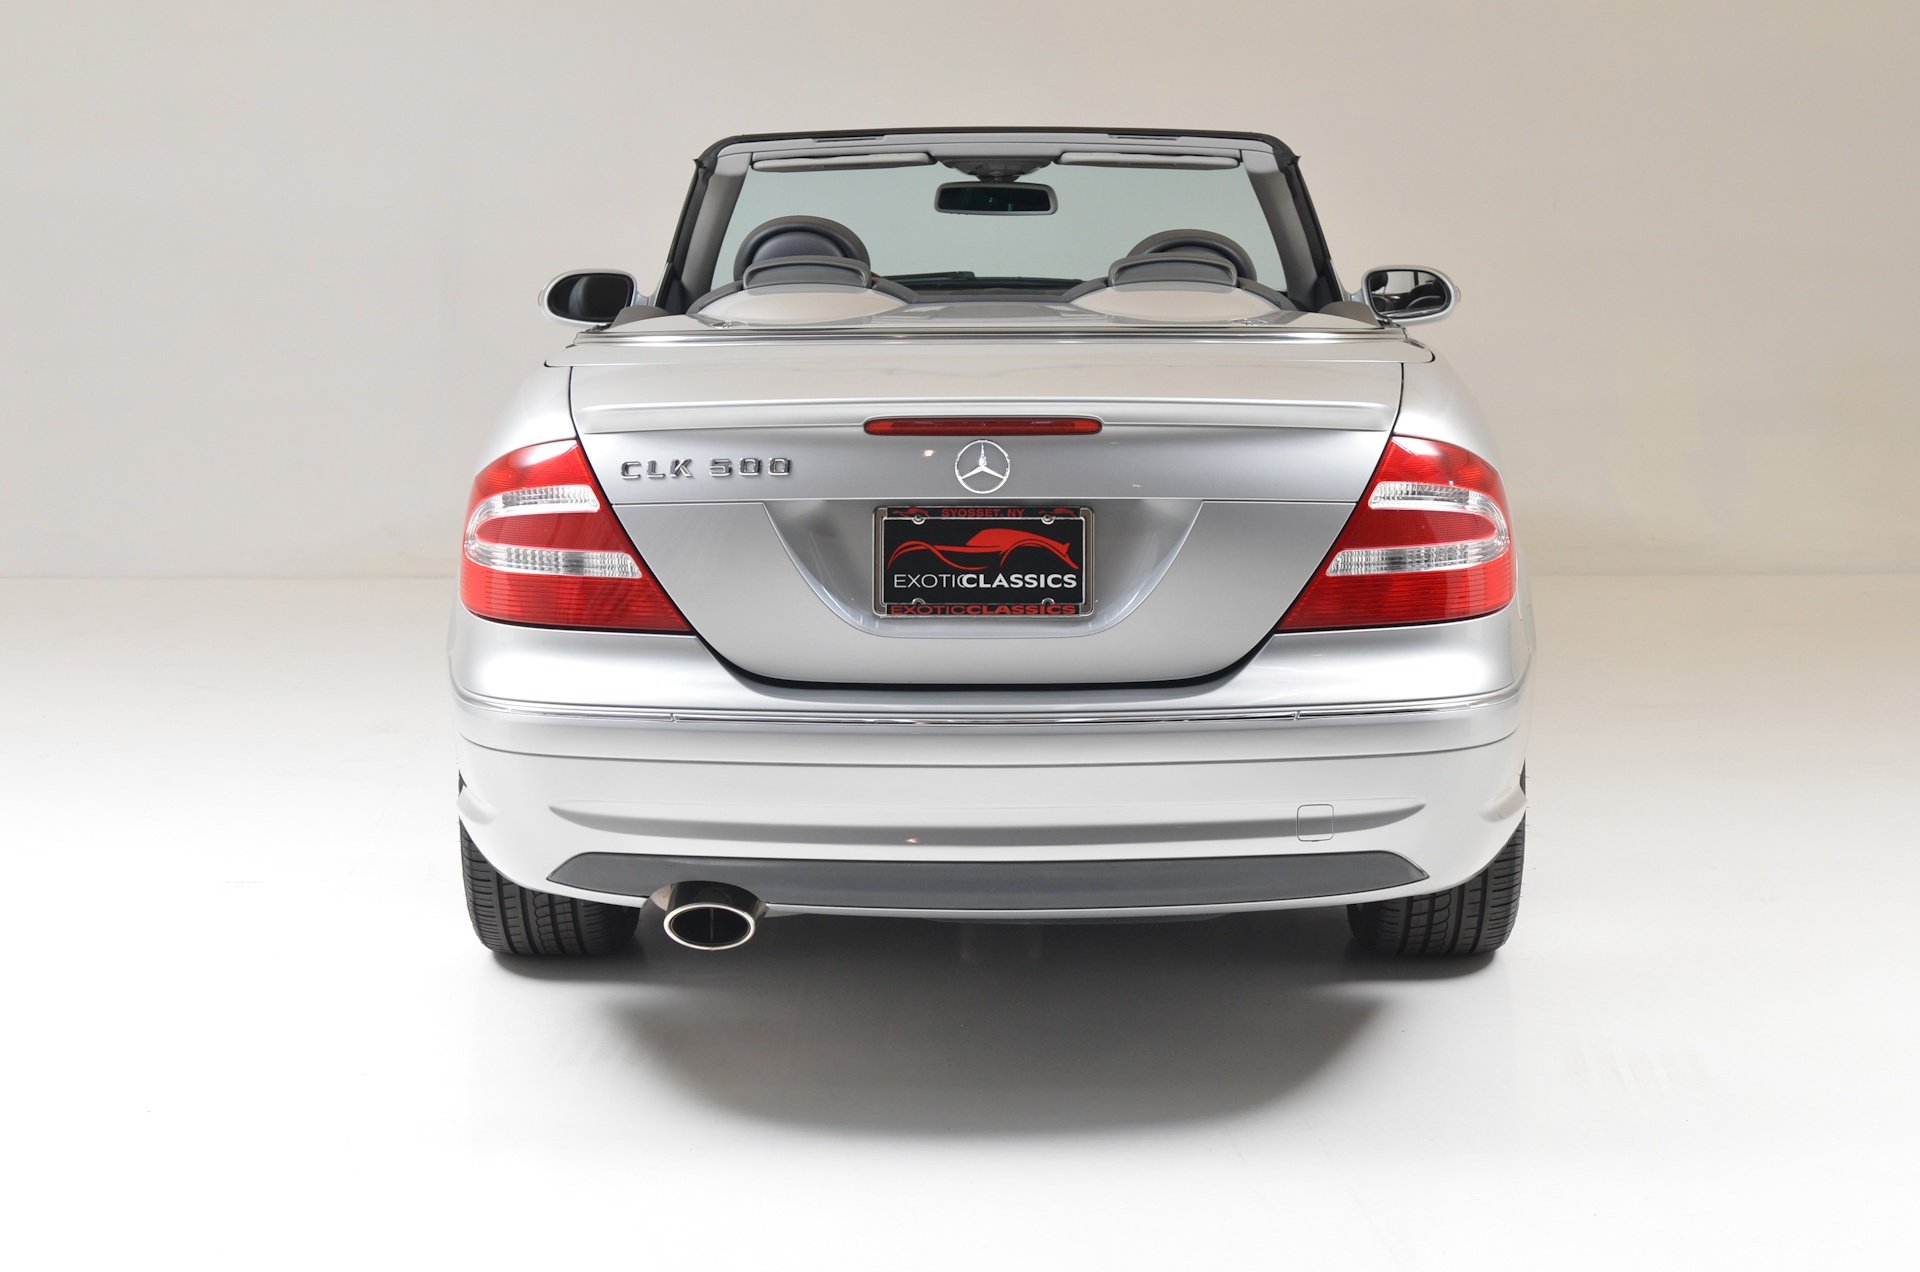 2005, Mercedes, Clk 500, Convertible, Silver, Cars Wallpaper